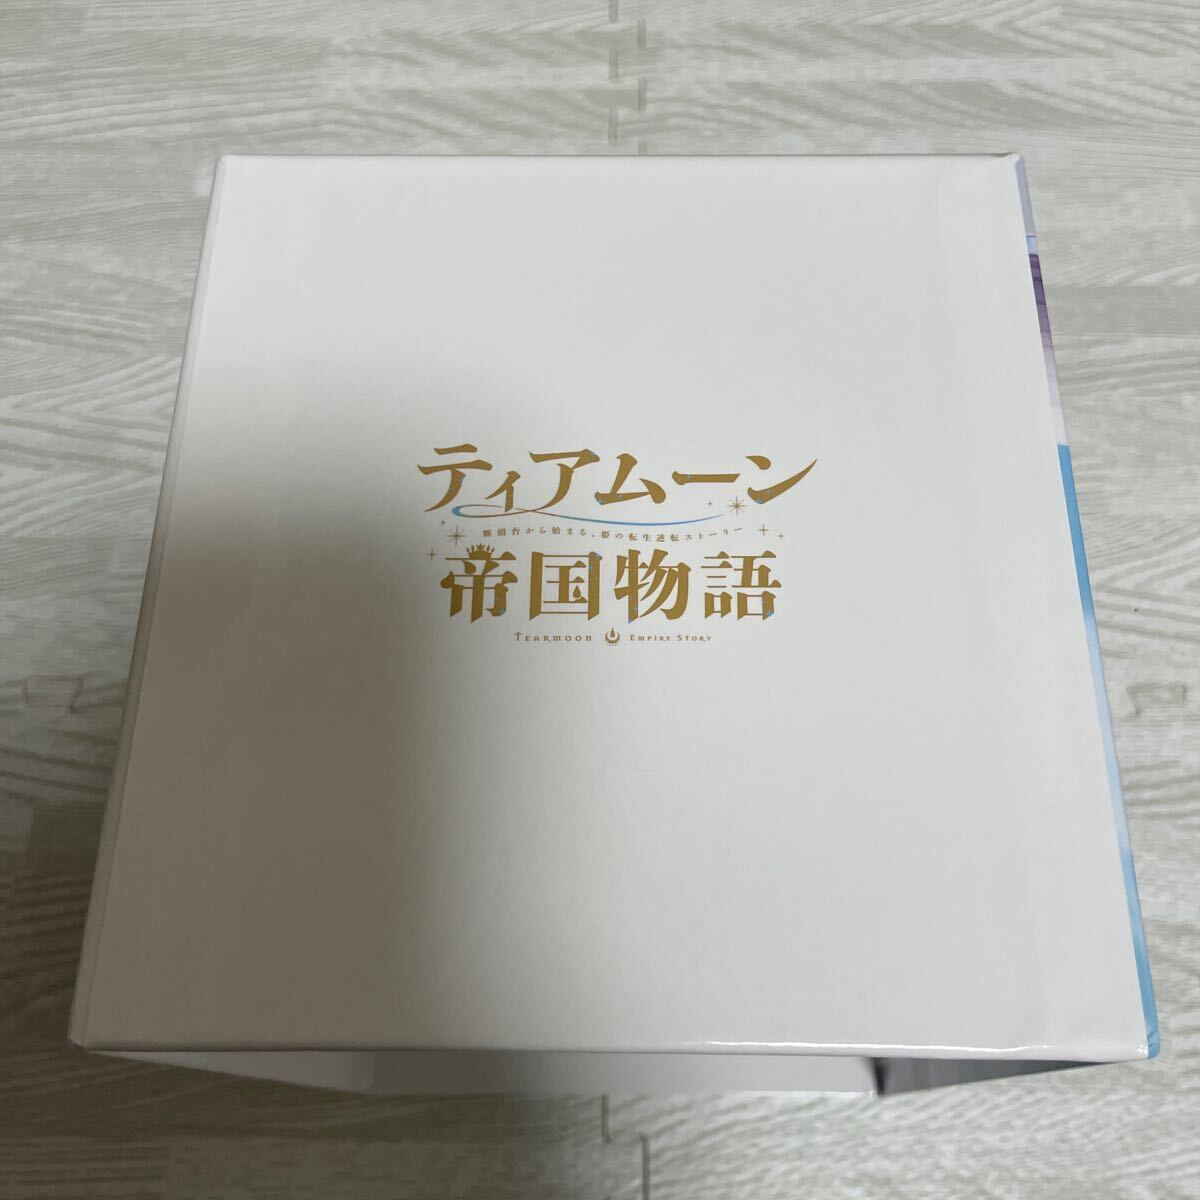 TVアニメ ティアムーン帝国物語 断頭台から始まる、姫の転生逆転ストーリー Blu-ray ソフマップ全巻購入特典 描き下ろし全巻収納BOX